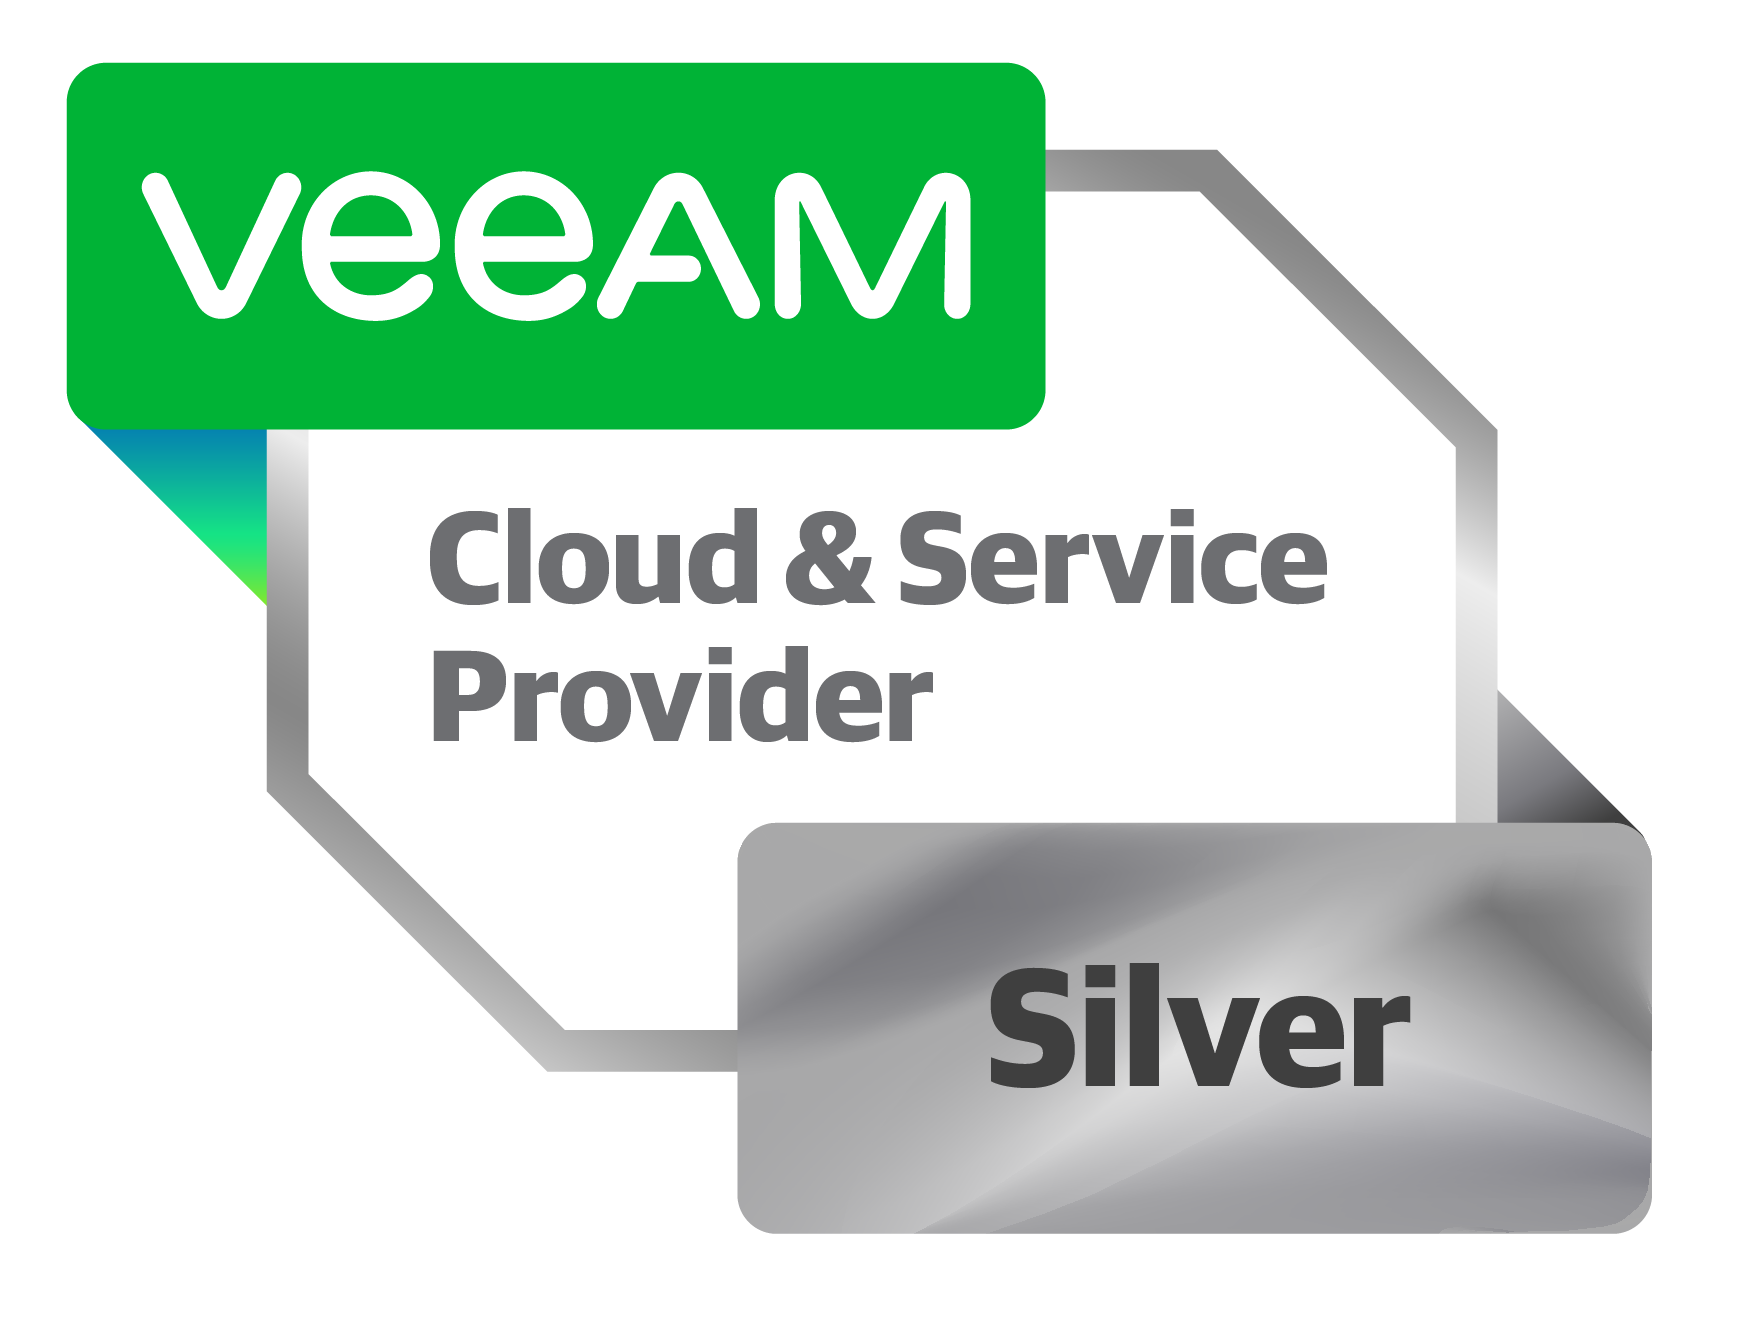 Veeam Cloud & Service Partner